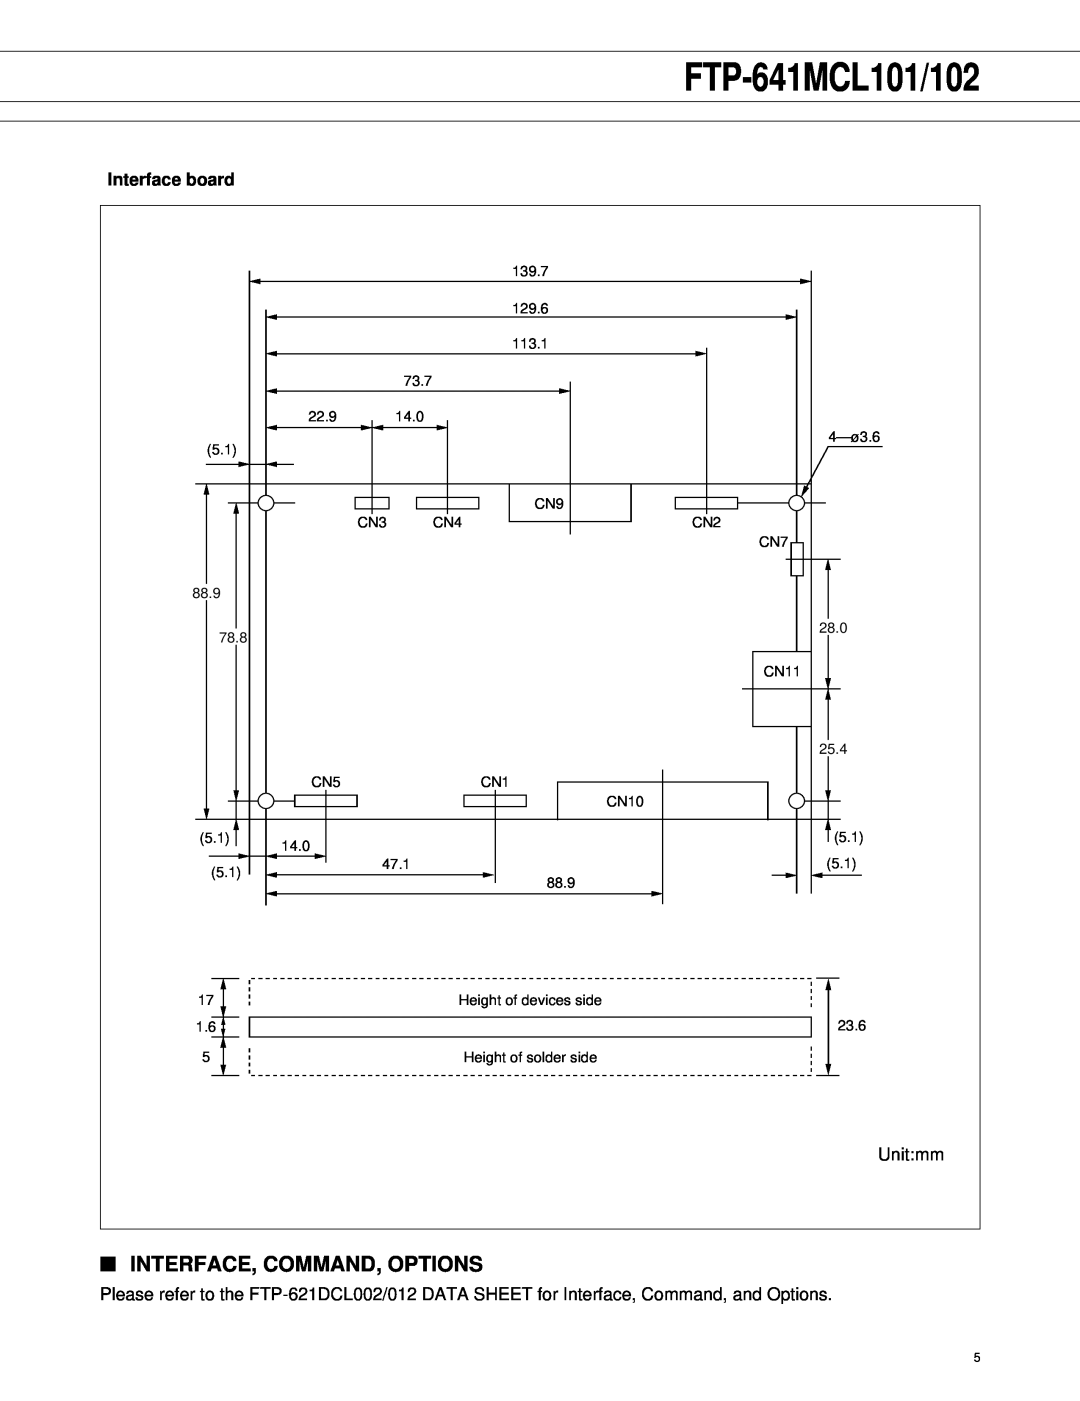 Fujitsu FTP-641MCL101/102 manual Interface, Command, Options, Interface board 